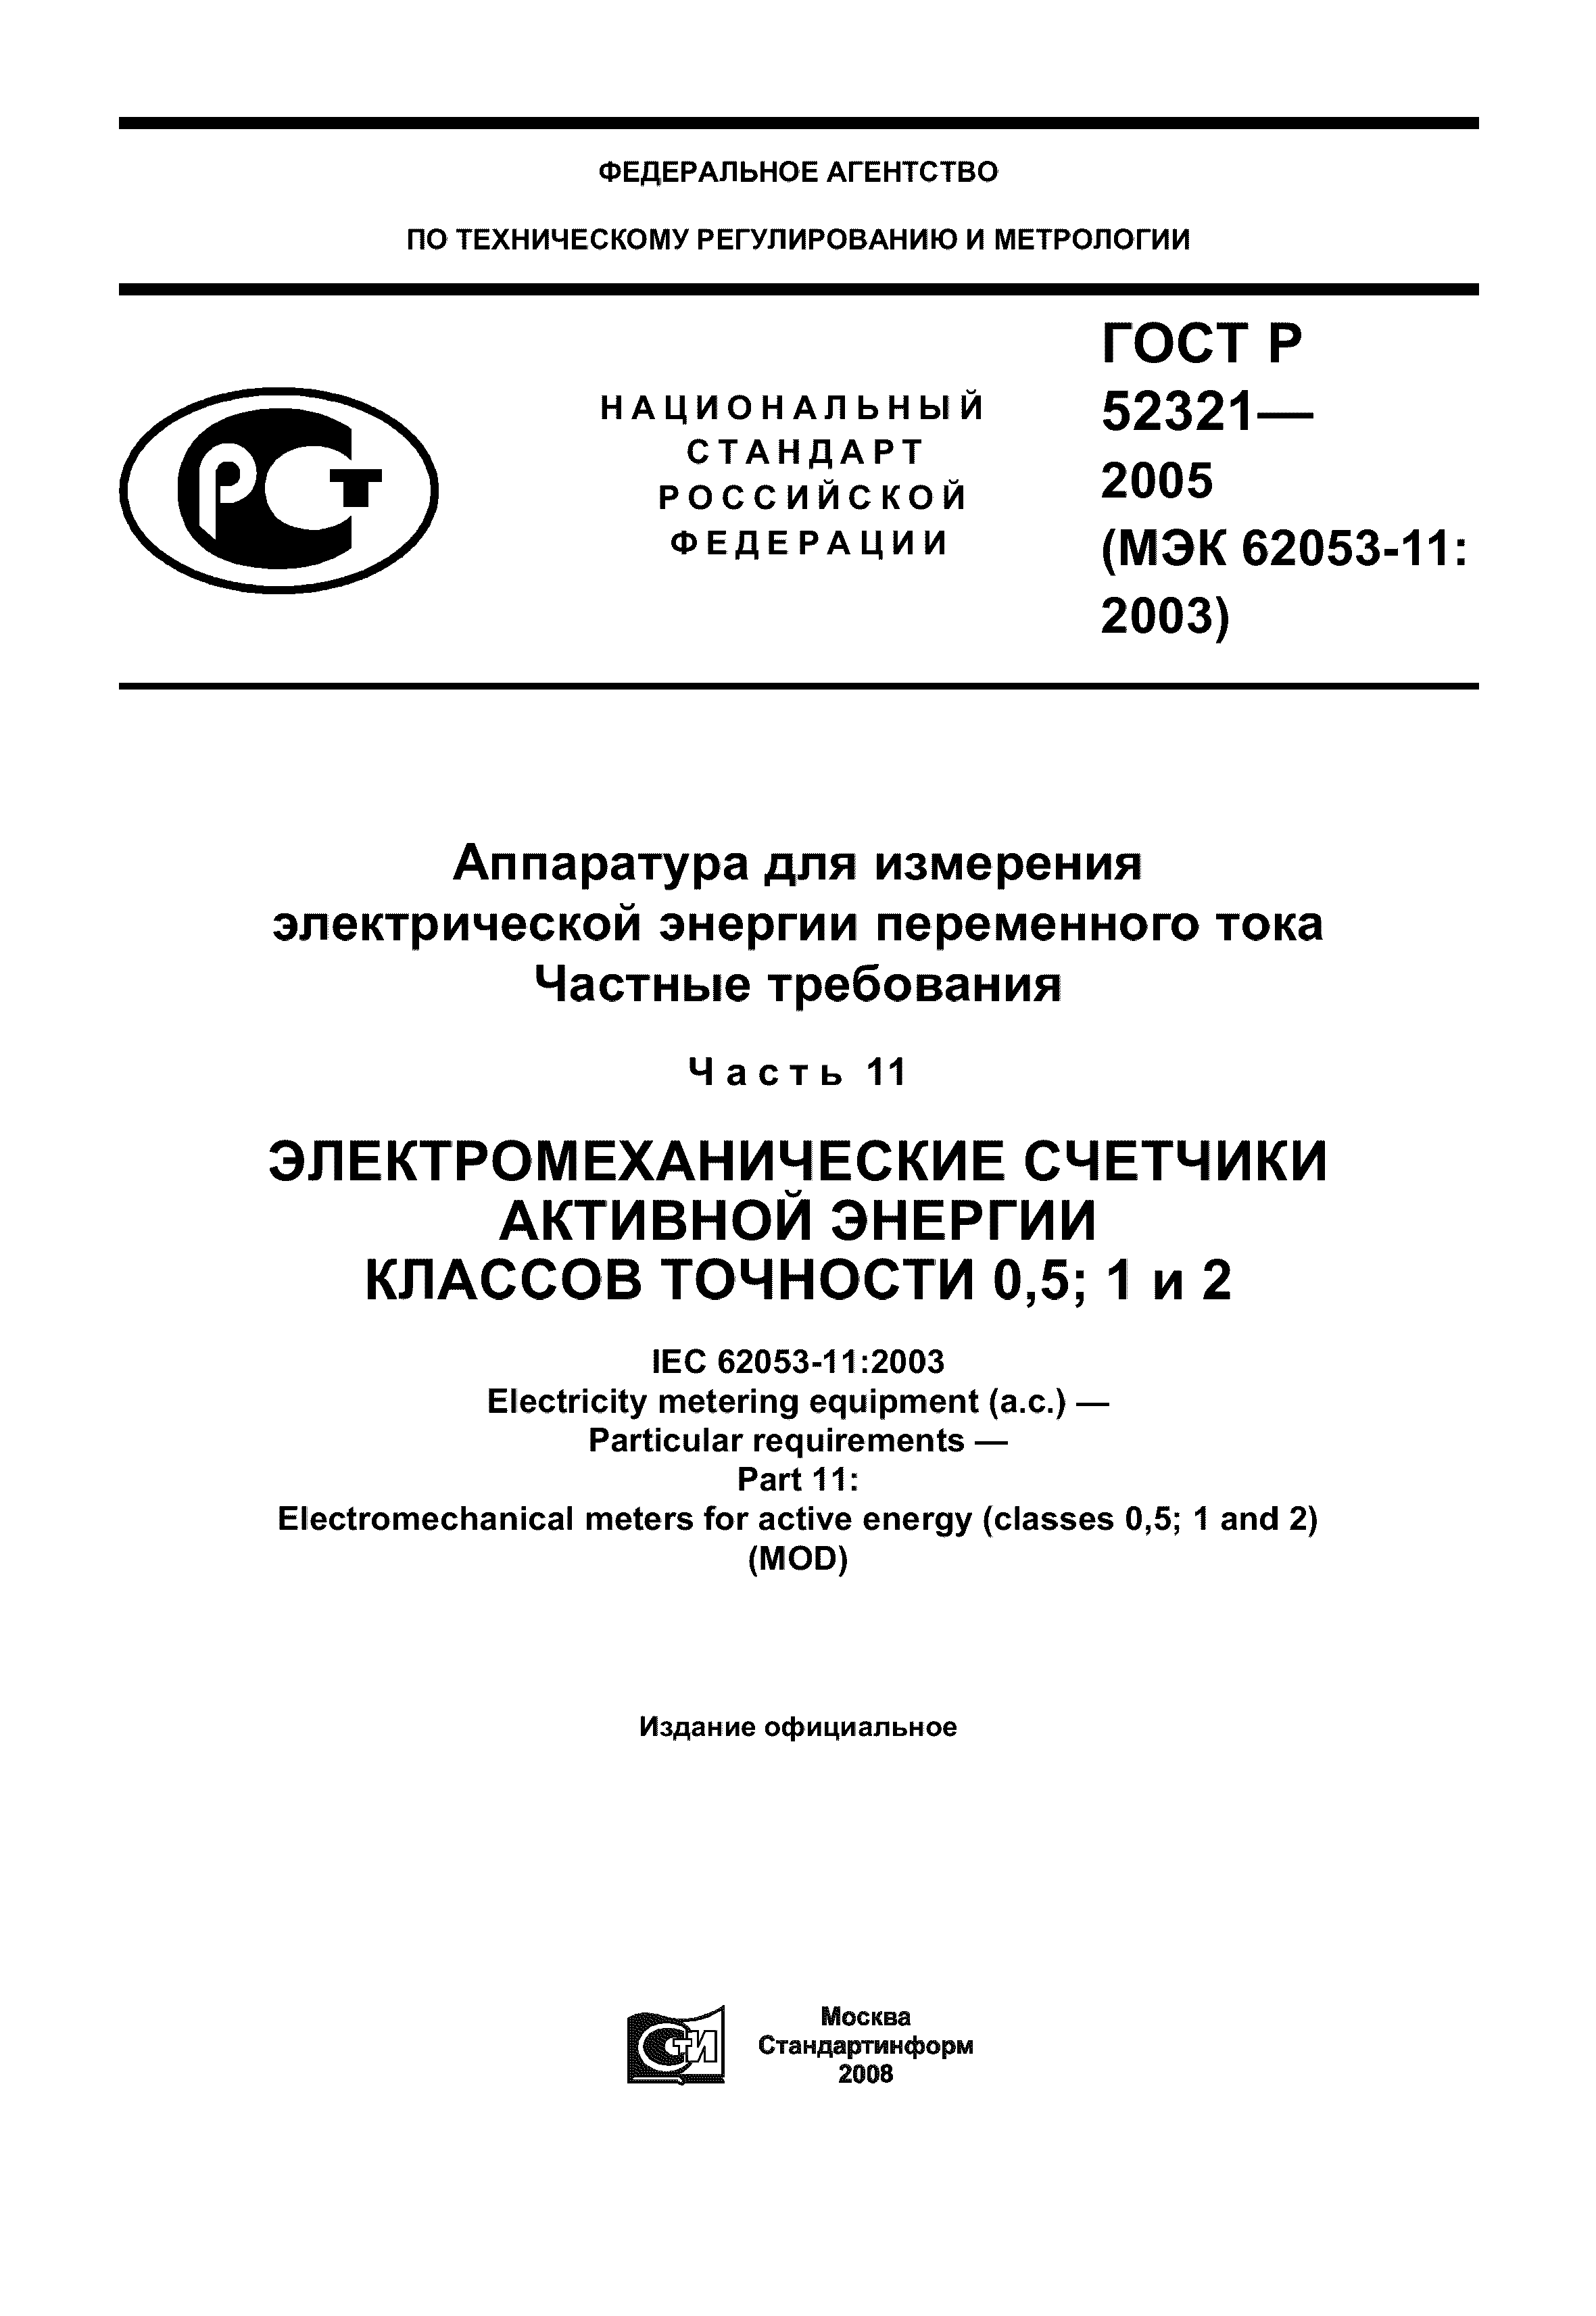 ГОСТ Р 52321-2005